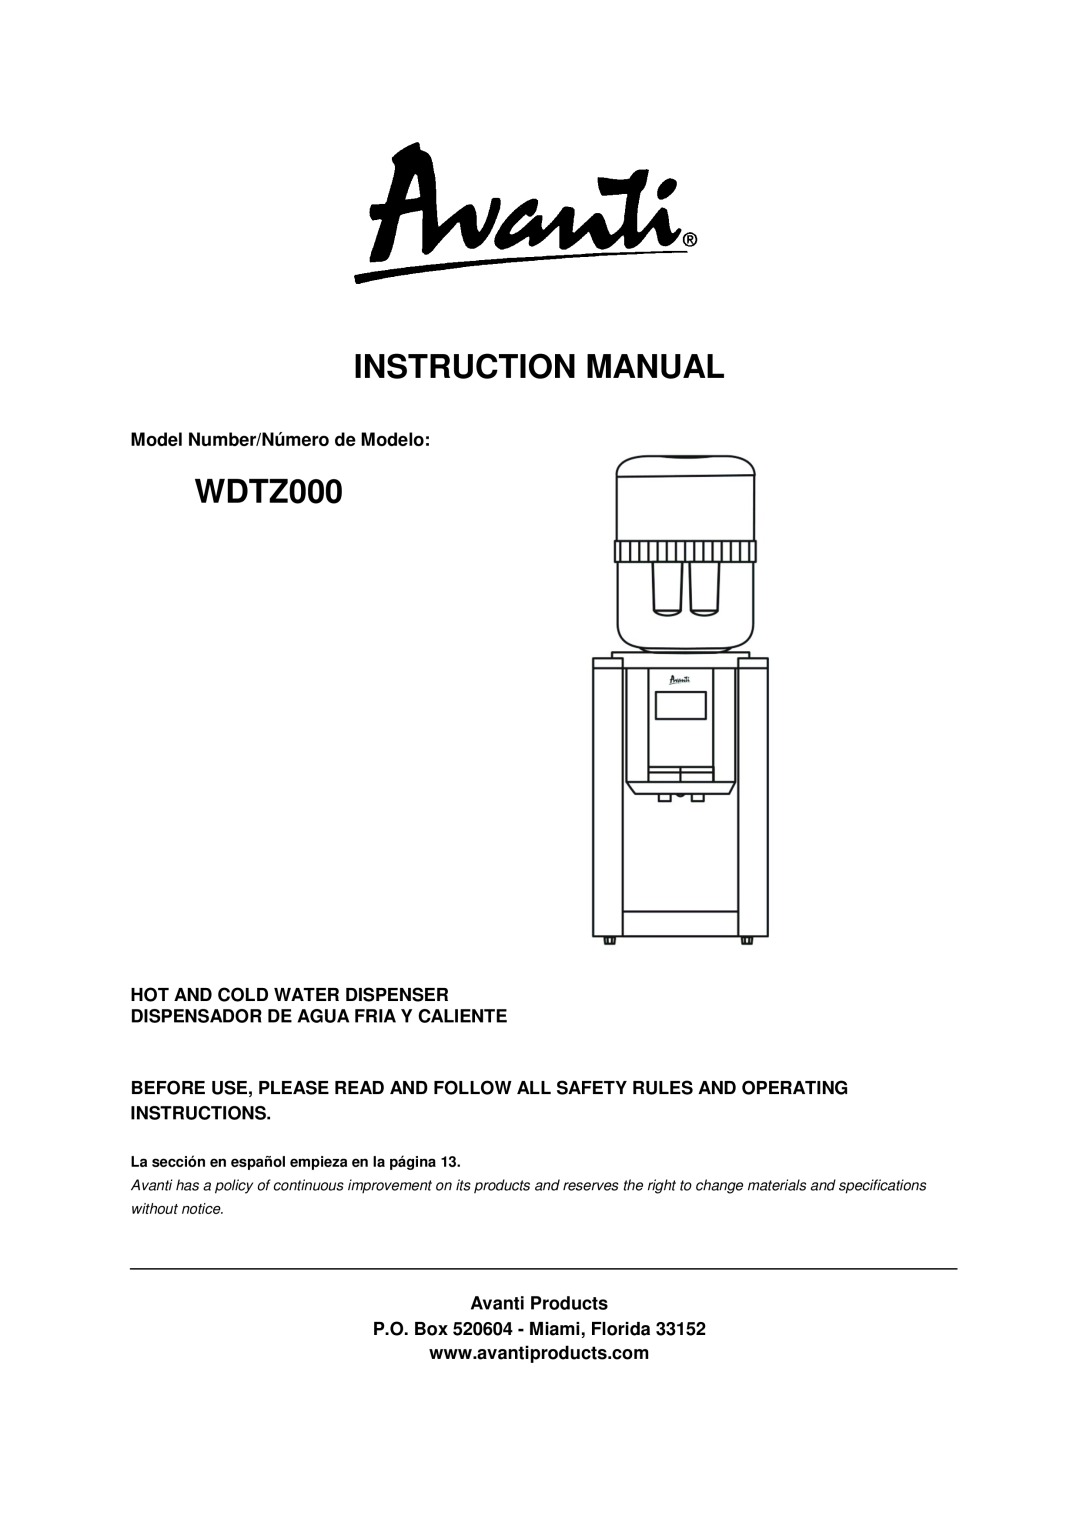 Avanti WDTZ000 instruction manual Model Number/Número de Modelo, Avanti Products P.O. Box 520604 - Miami, Florida 